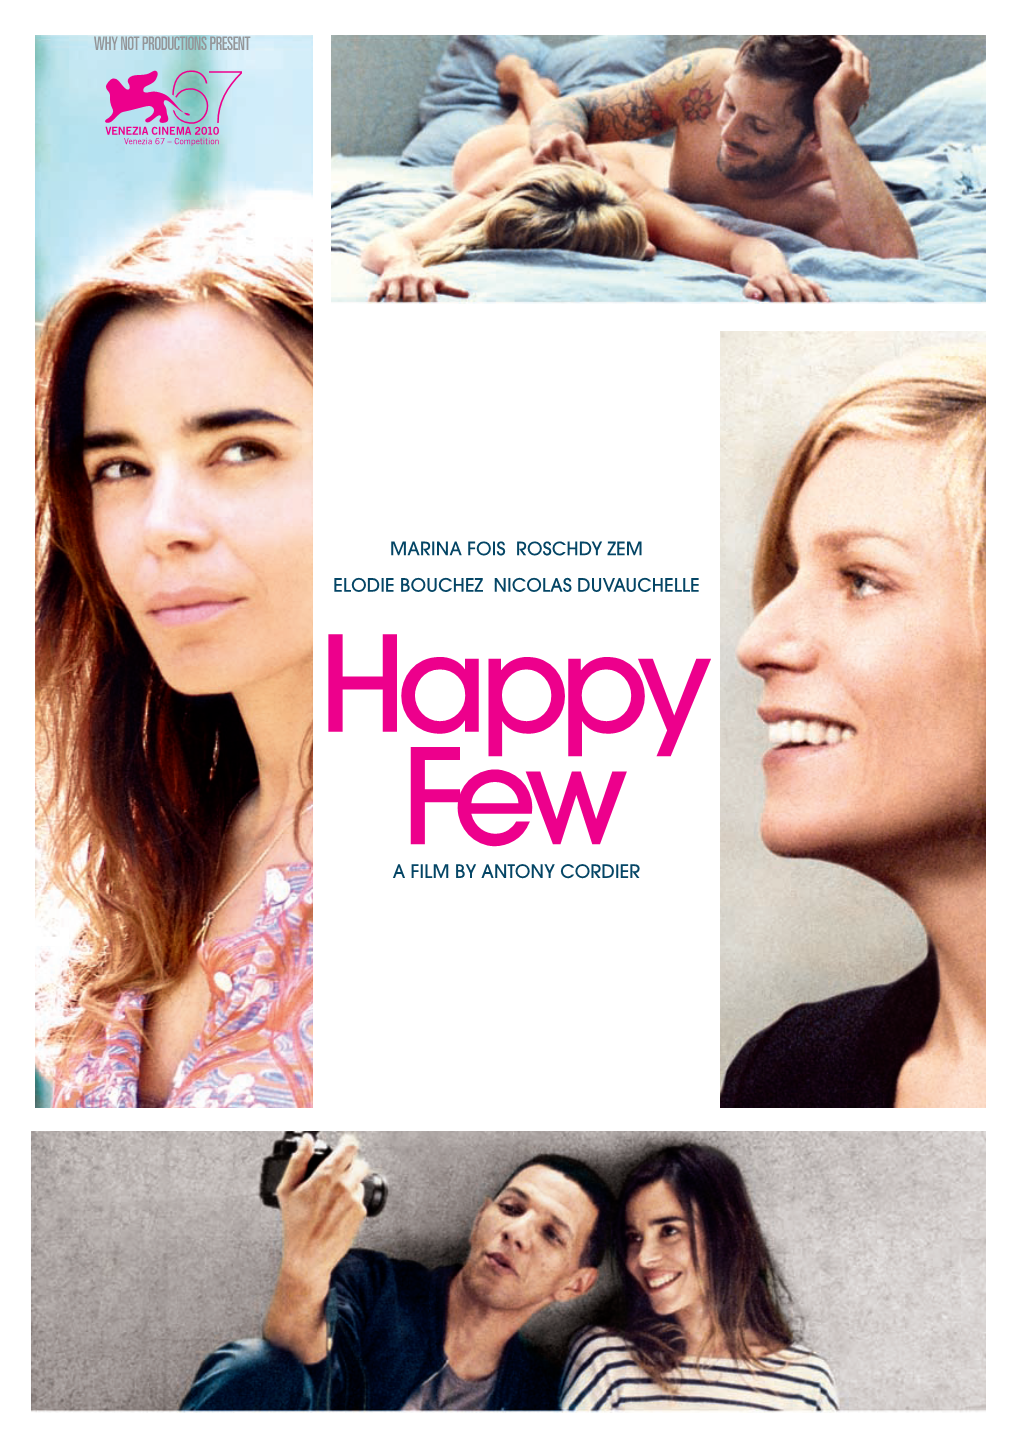 Happy Few a FILM by ANTONY CORDIER WHY NOT PRODUCTIONS PRESENT Happy Few a Film by ANTONY CORDIER